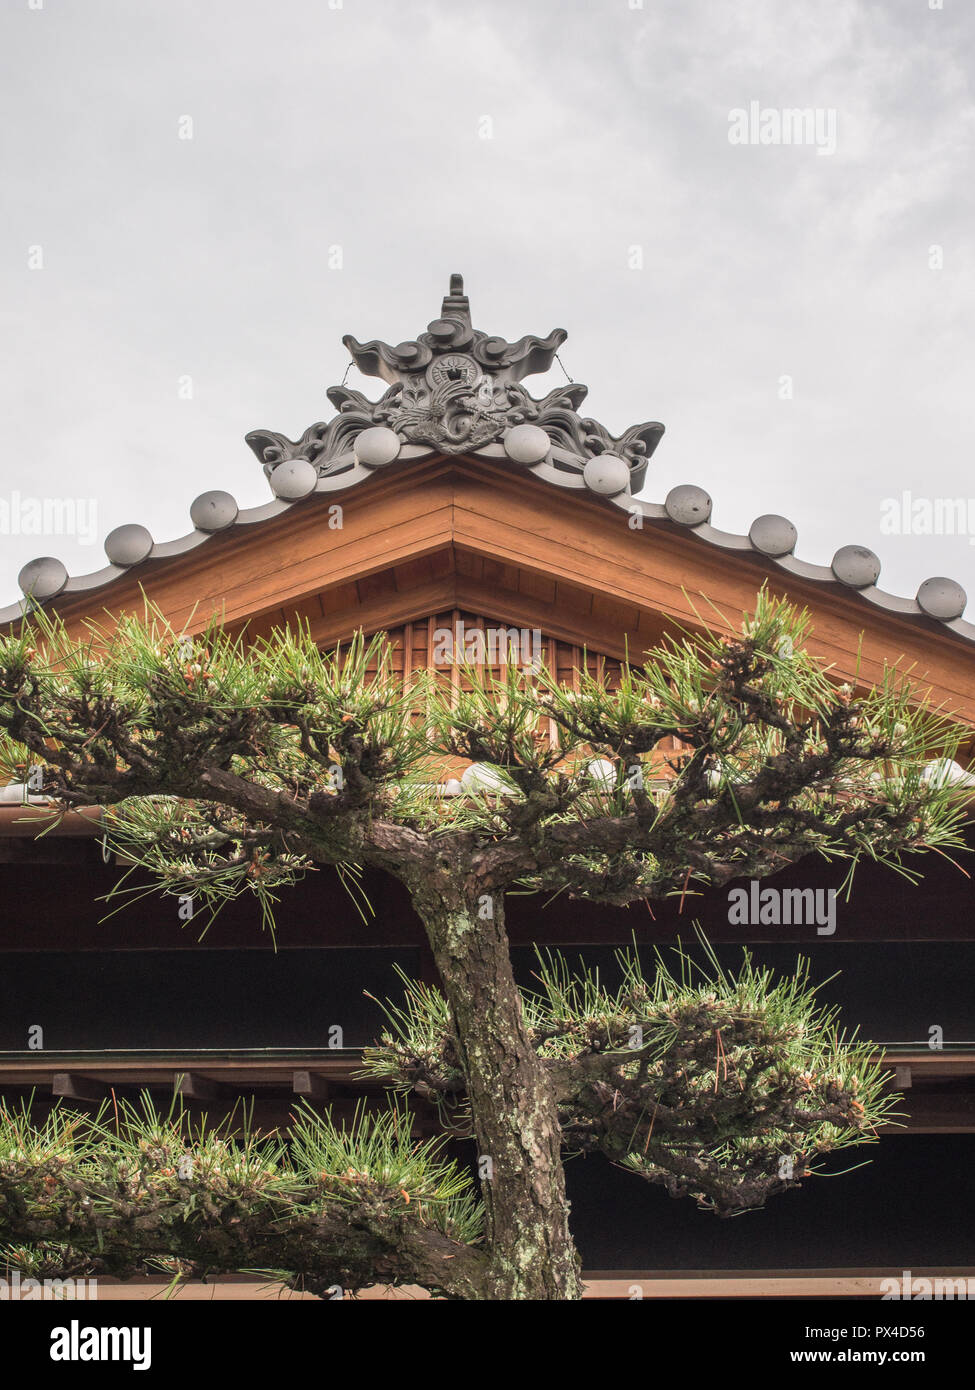 Roof gable with traditional kawara decorative tile, and cloud pruned pine tree, Shikoku-chuo, Ehime, Japan Stock Photo